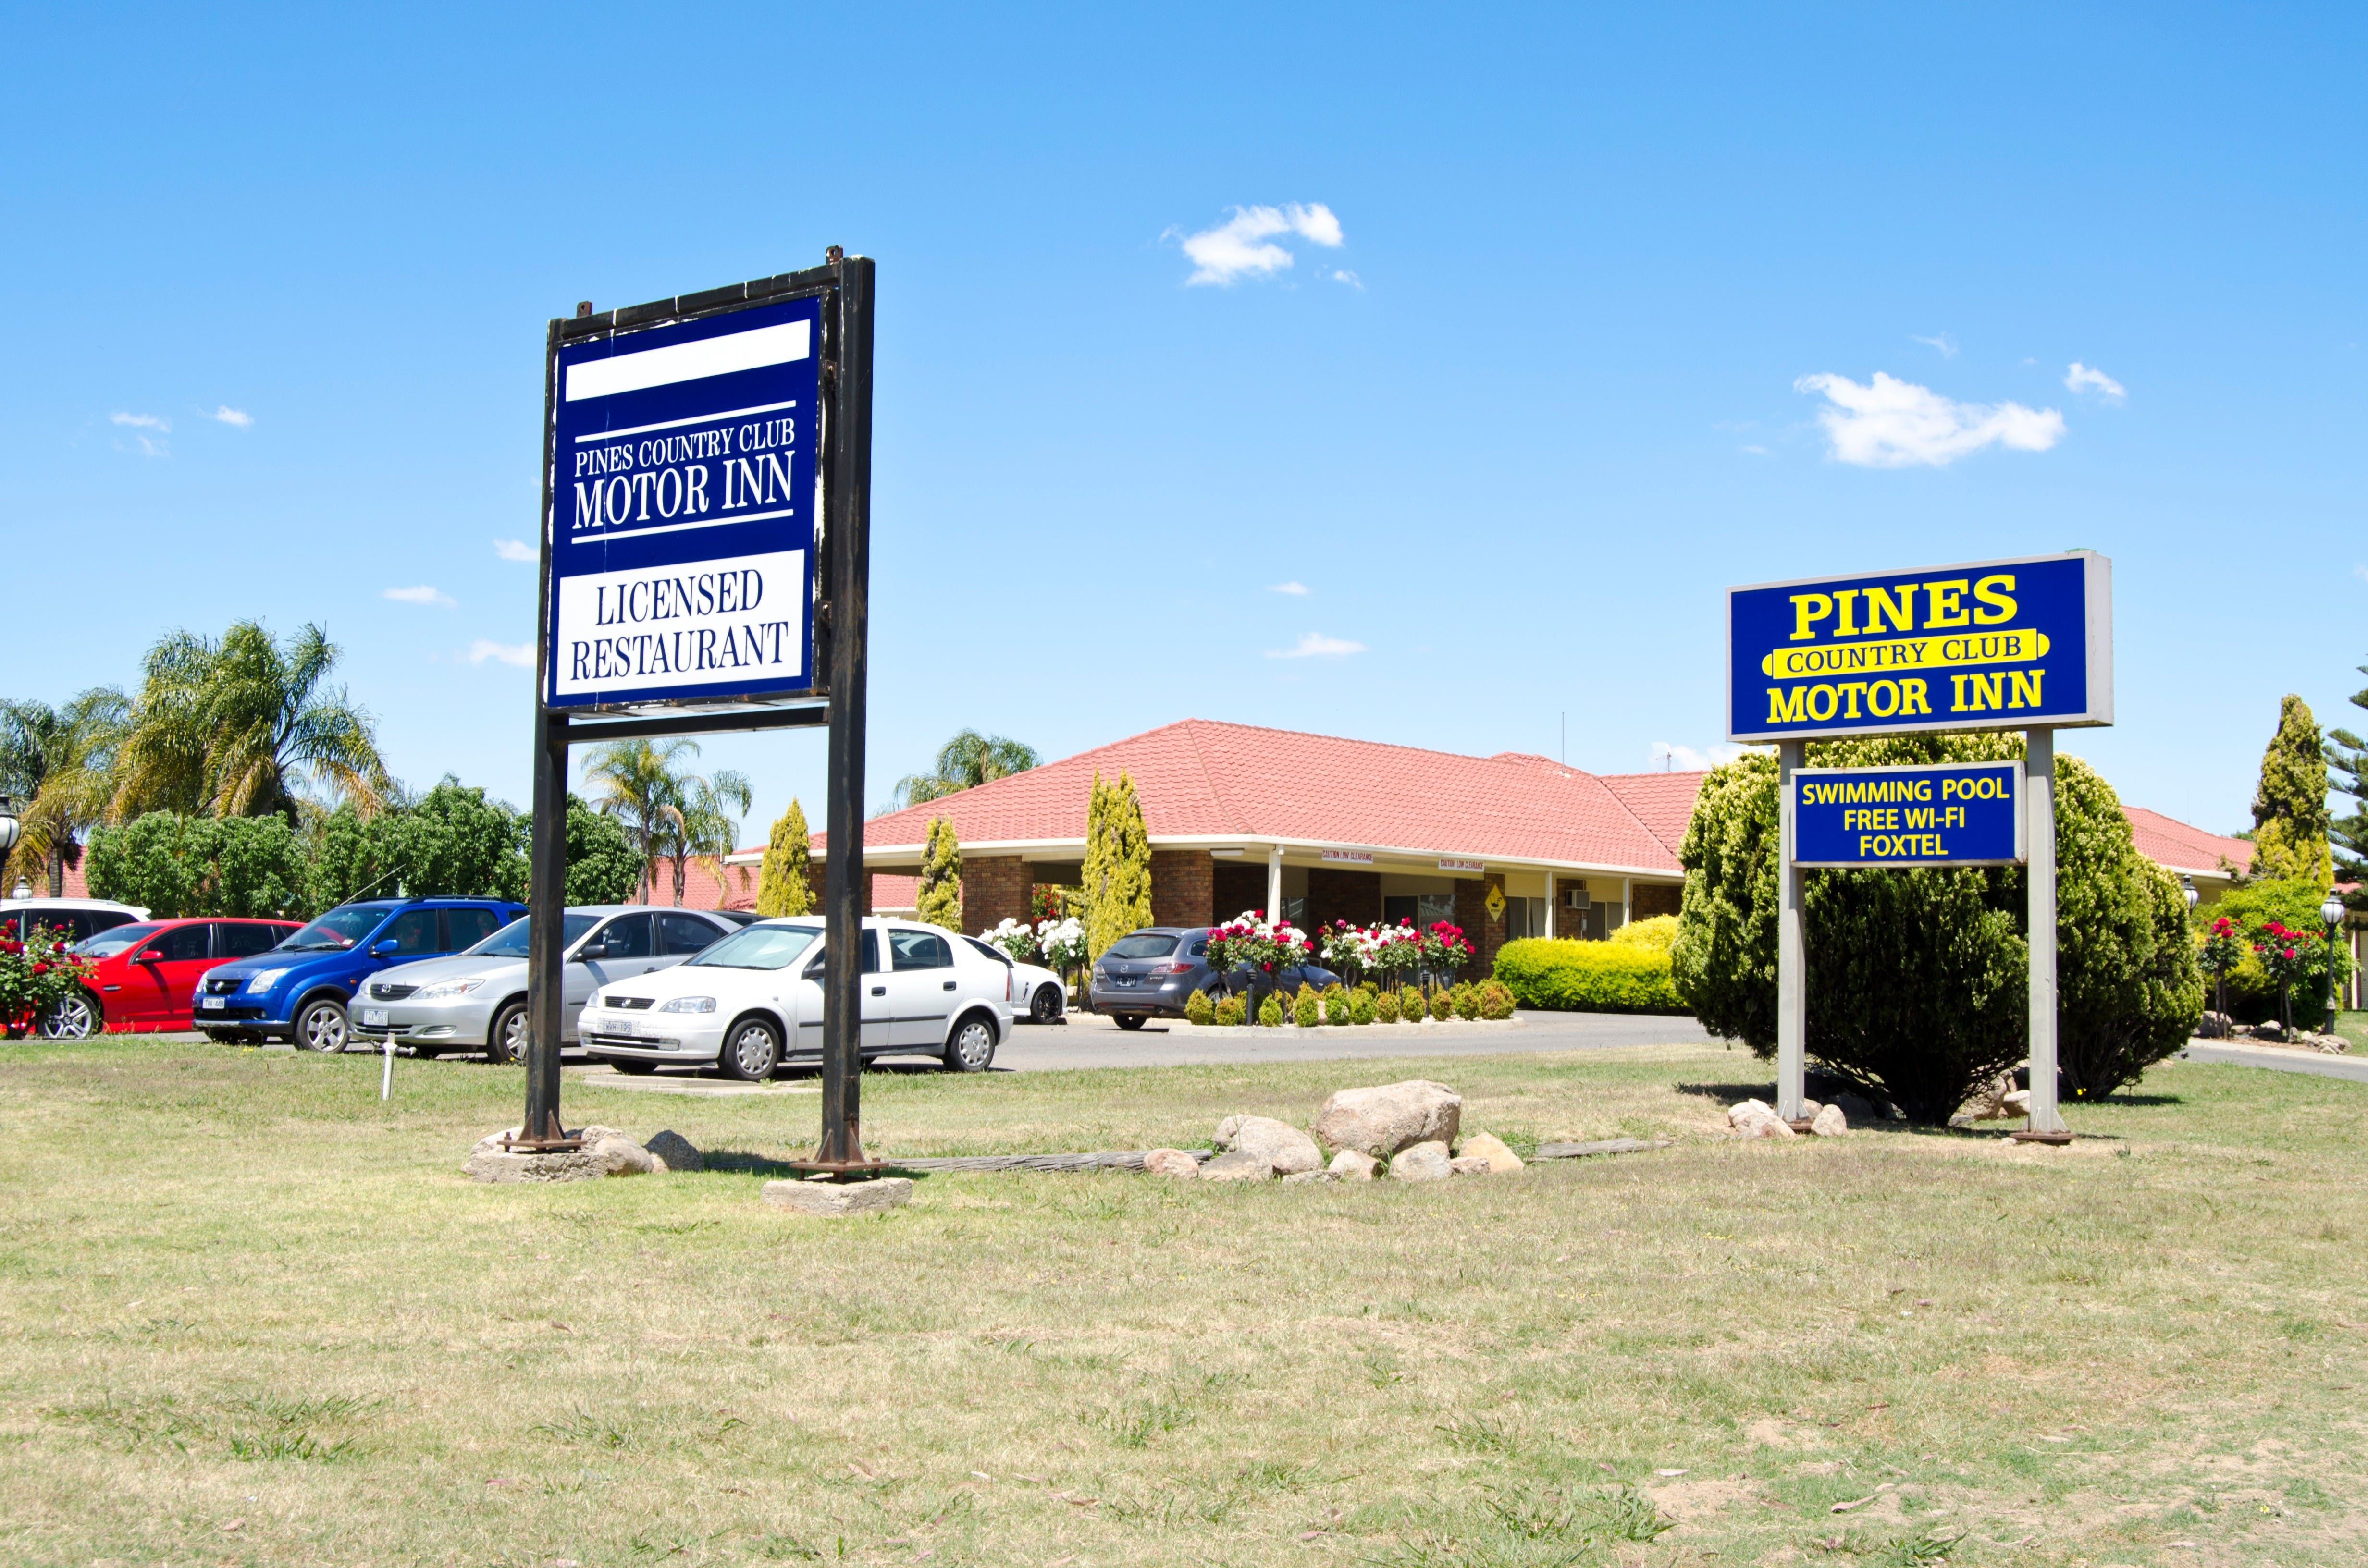 Pines Country Club Motor Inn - Accommodation in Bendigo